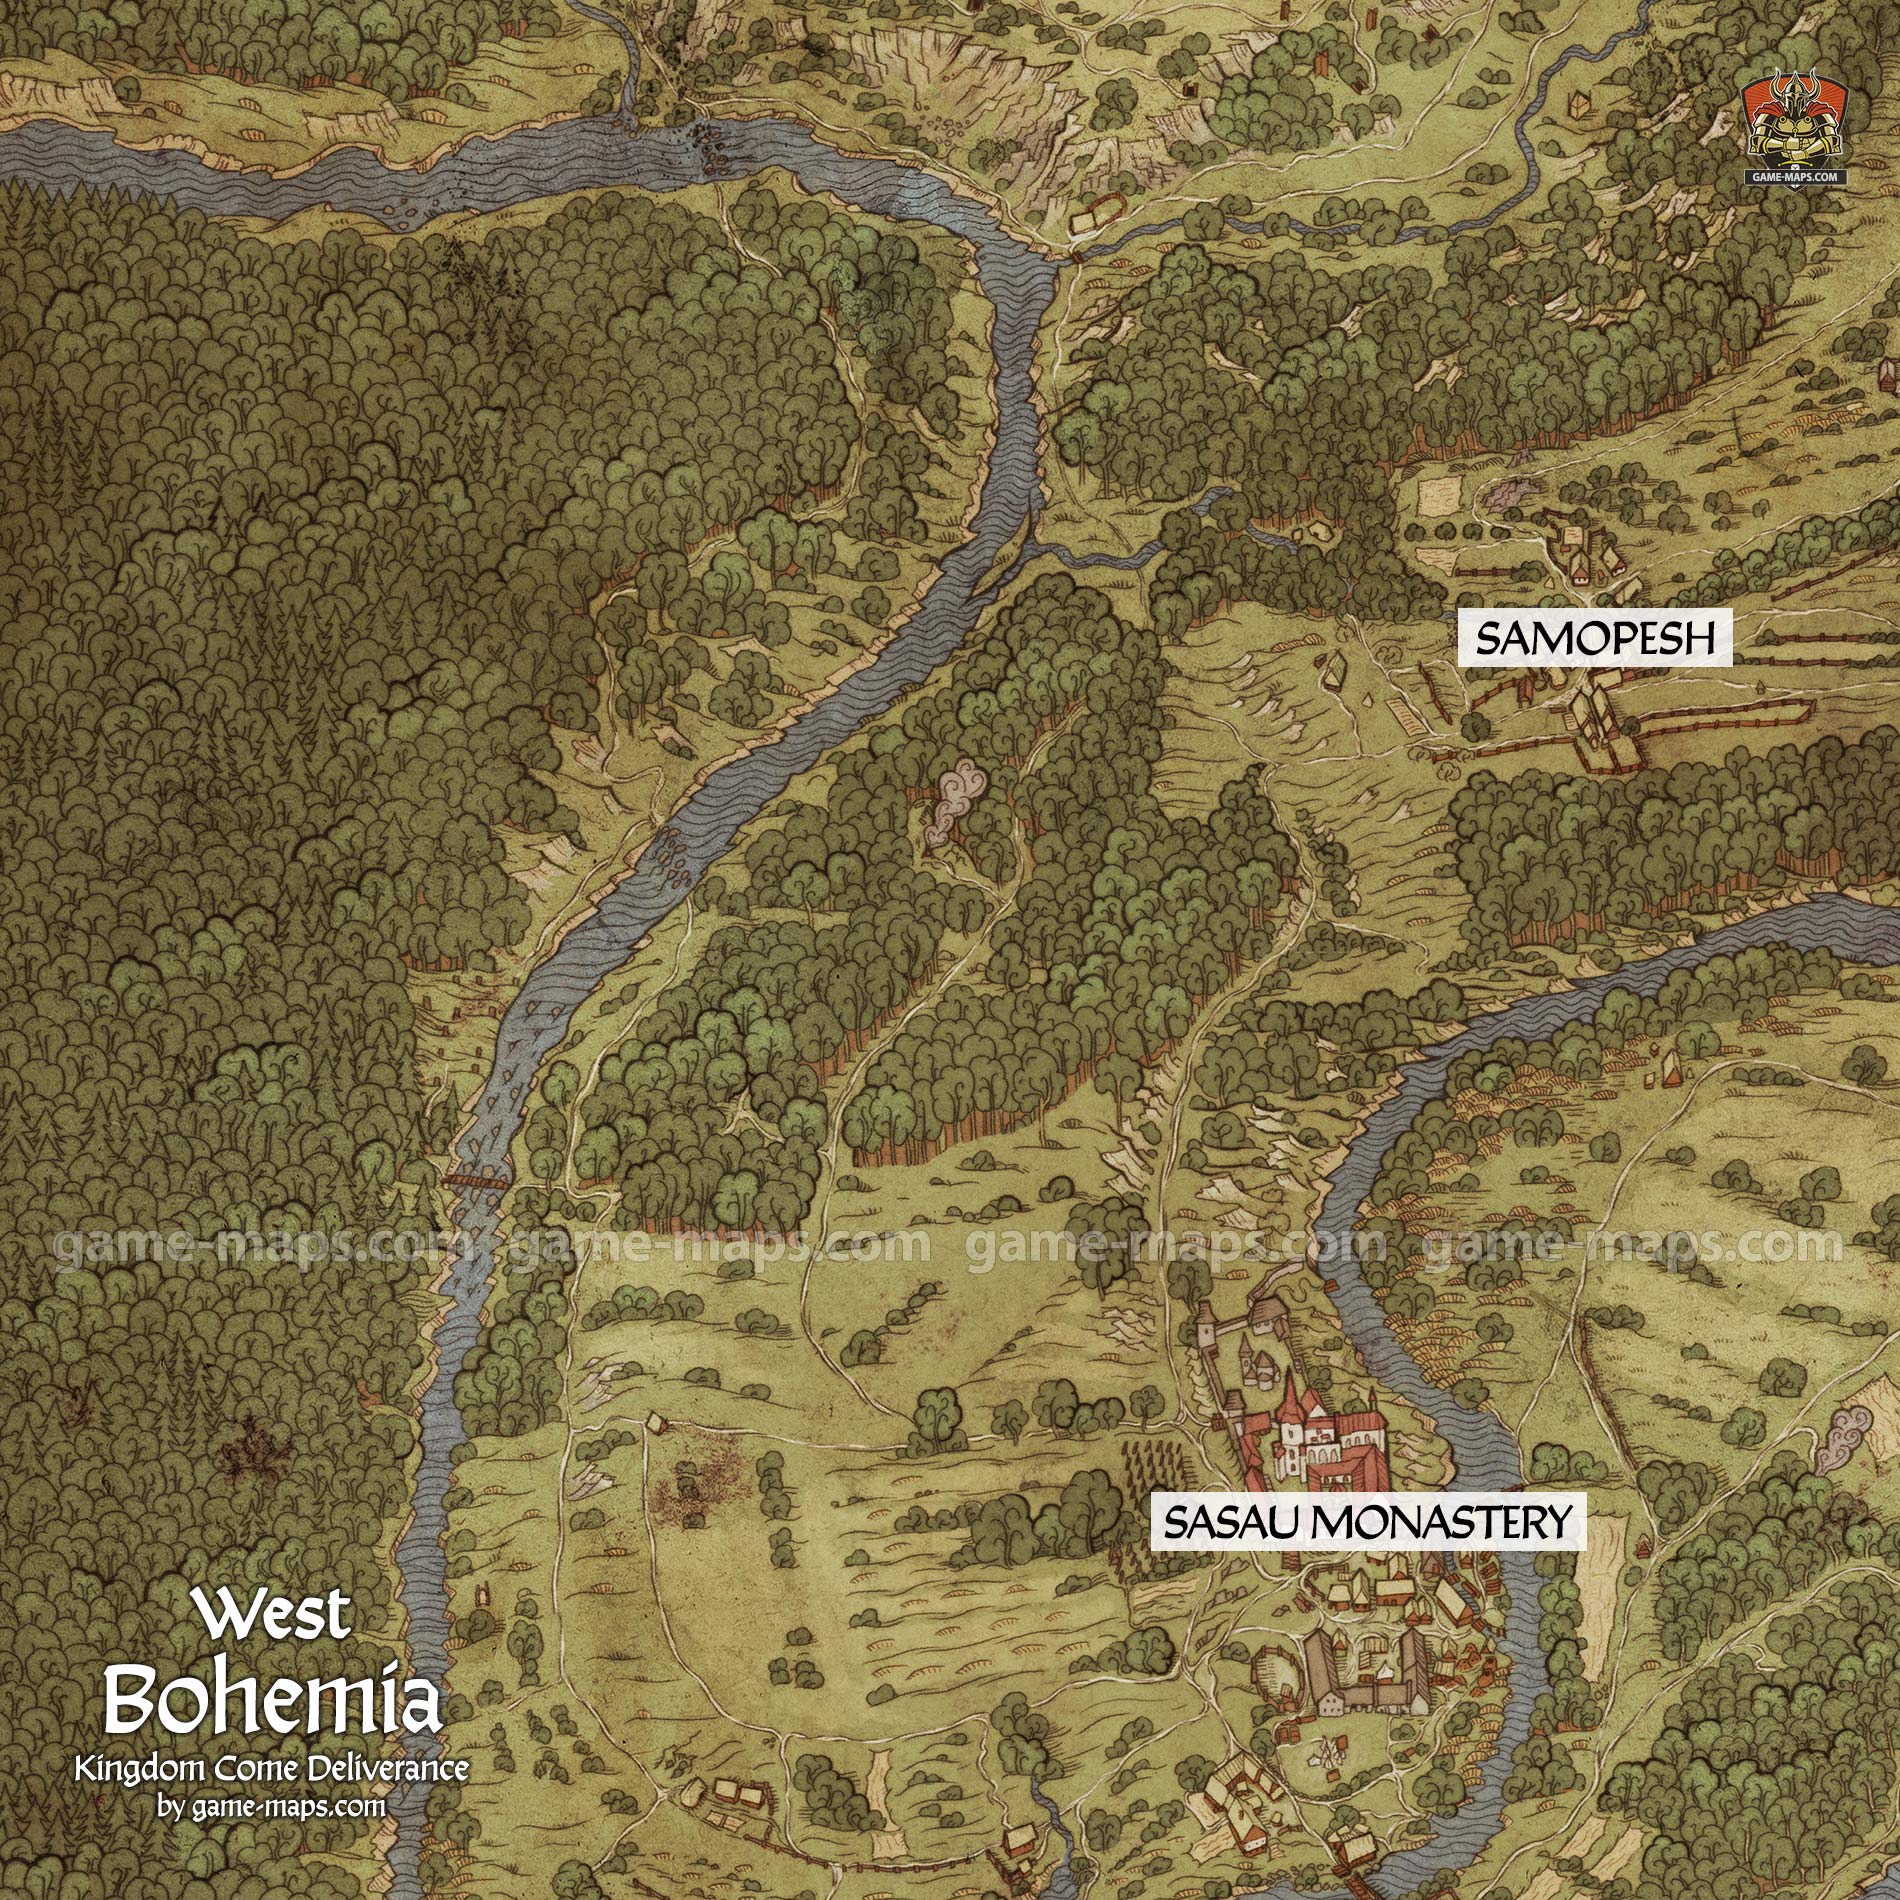 West Bohemia Map for Kingdom Come Deliverance